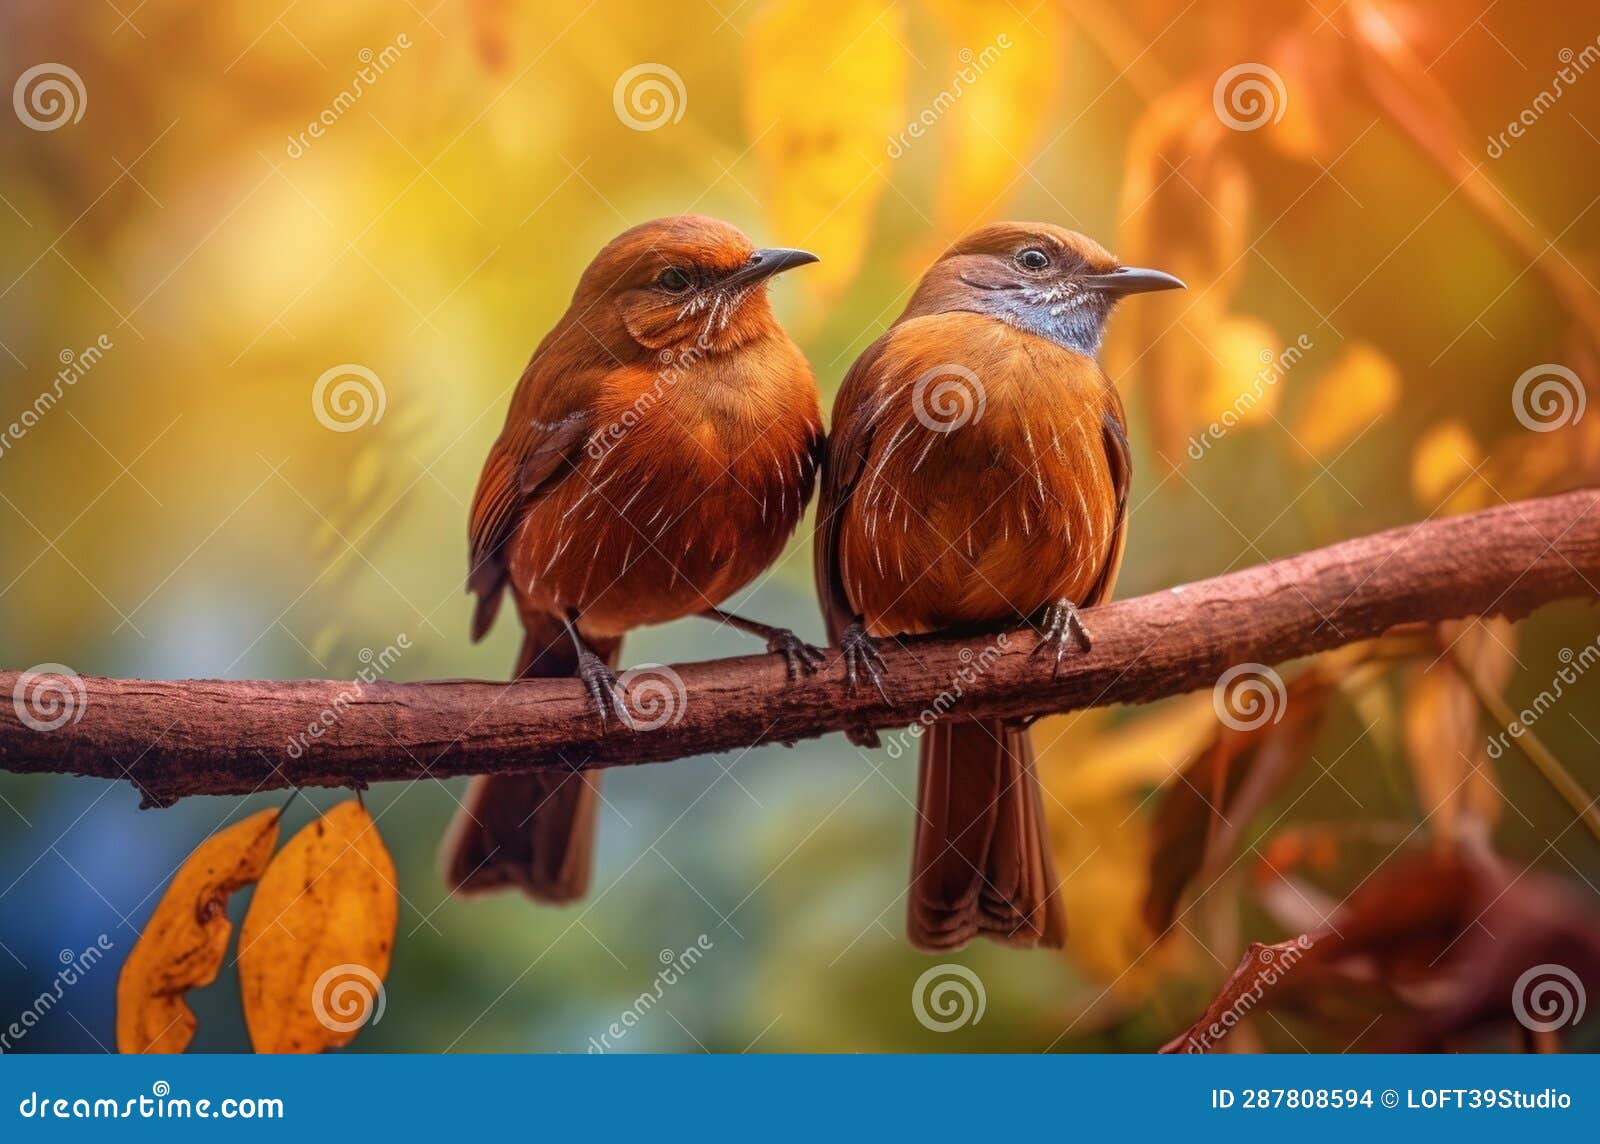 yelloweyed_babbler_birds_rest_on_a_branch_1690599625713_1